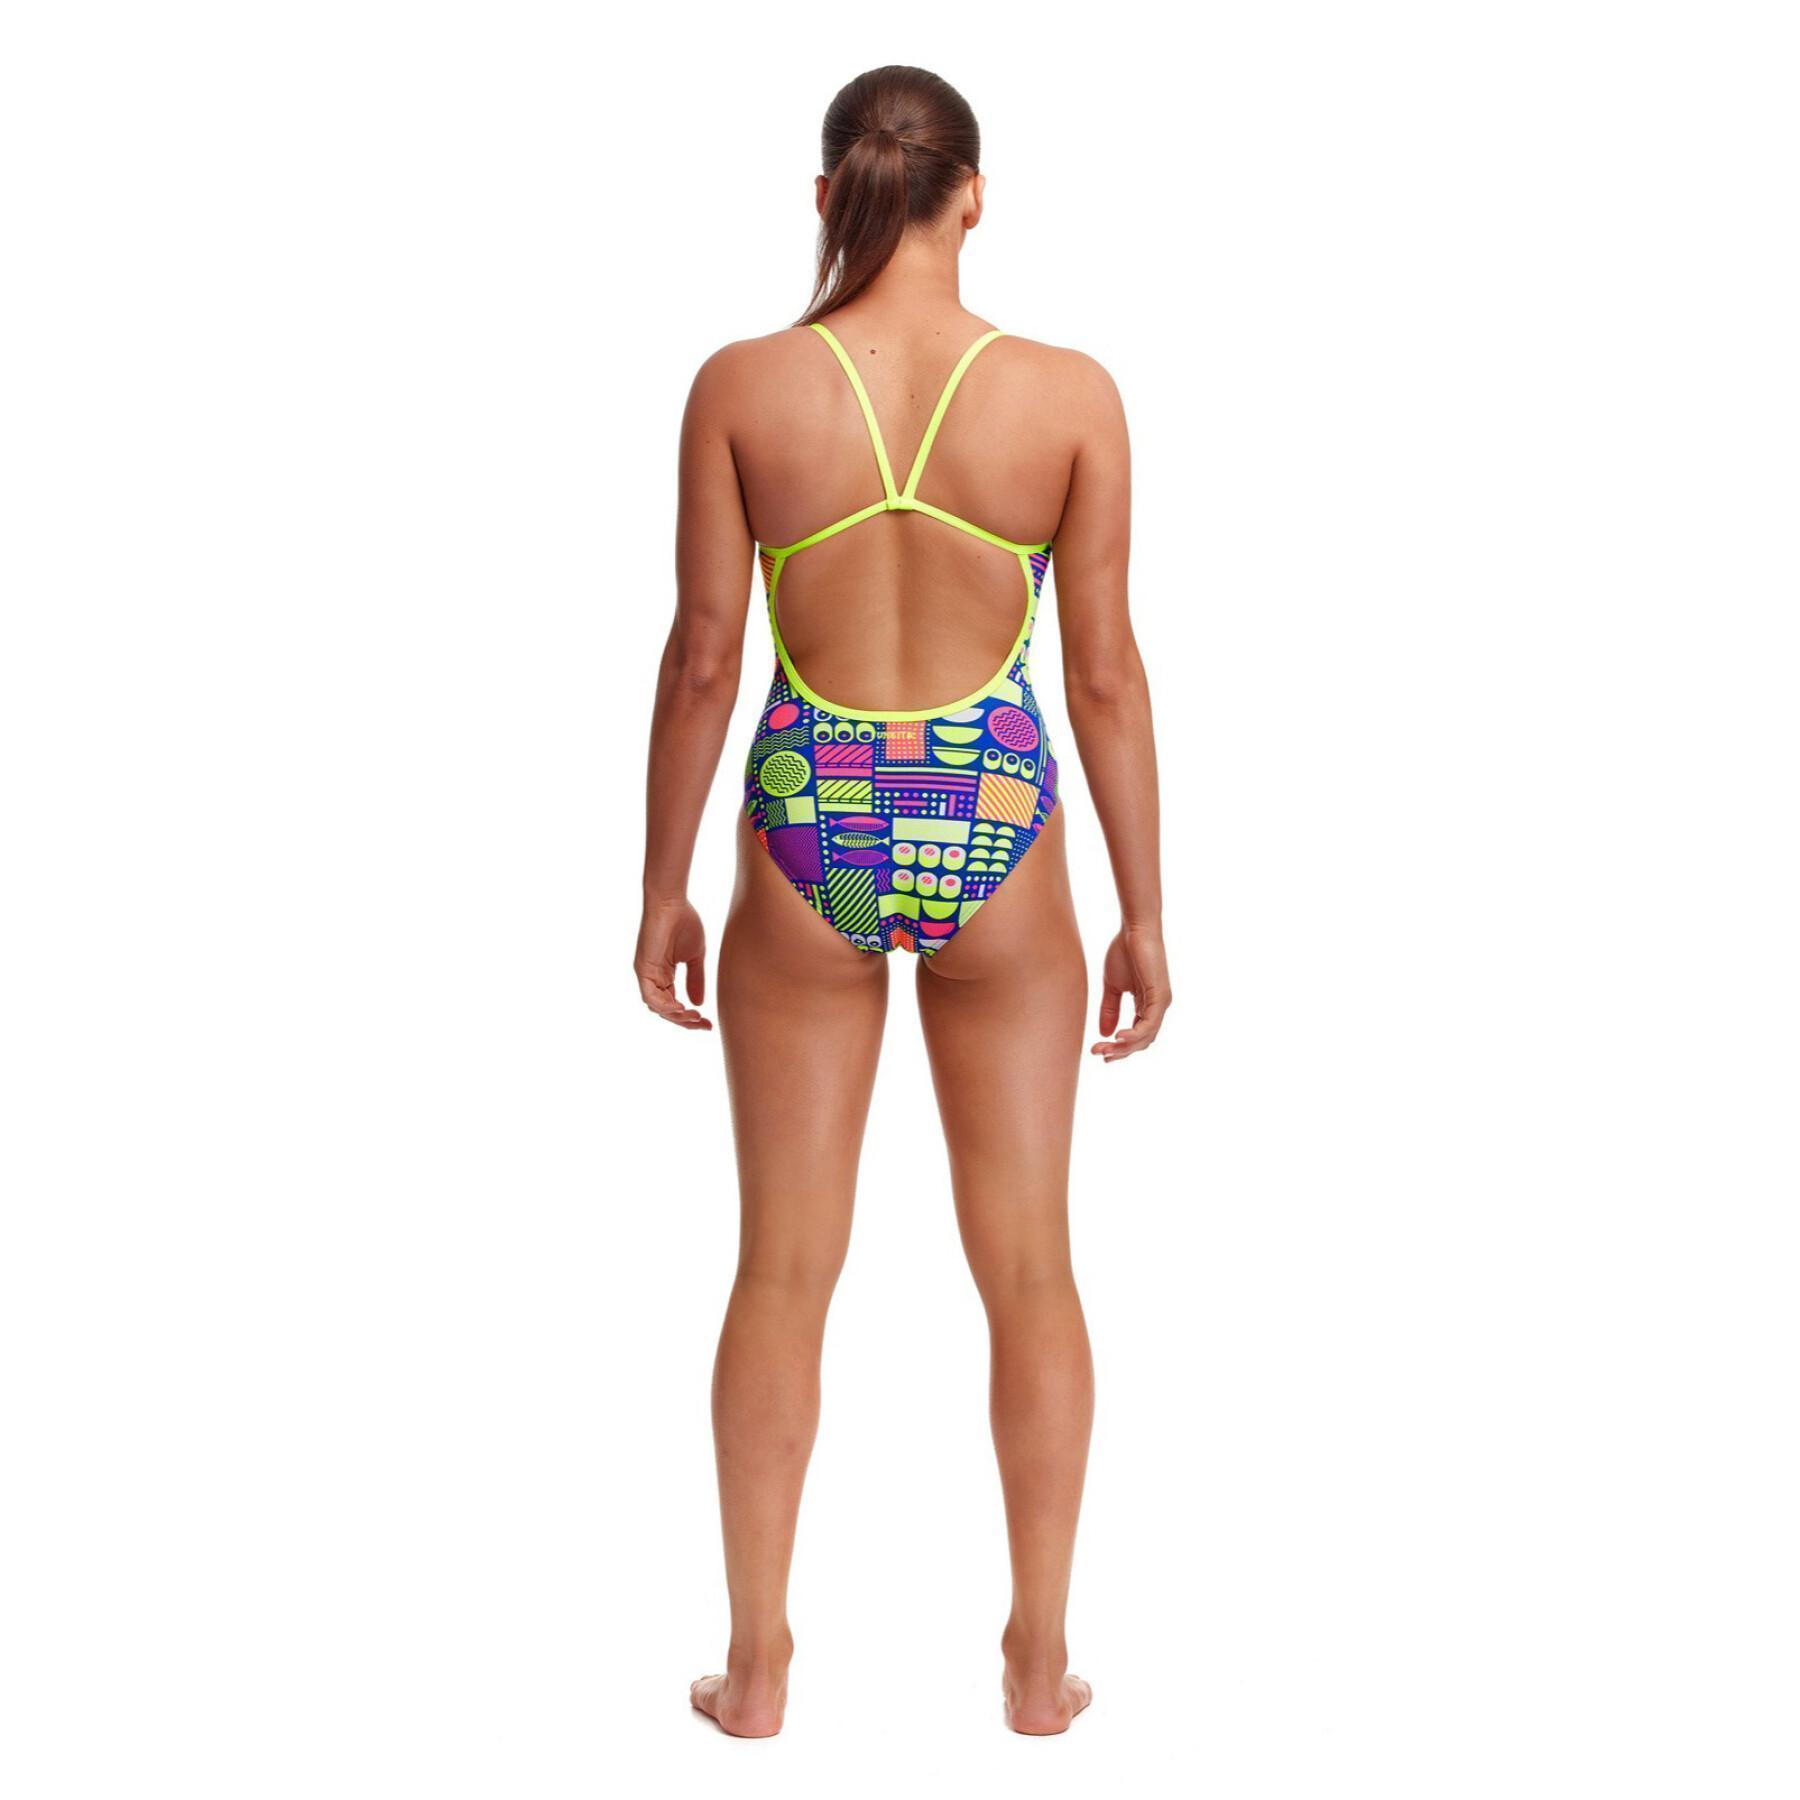 1-piece swimsuit for women Funkita Strap